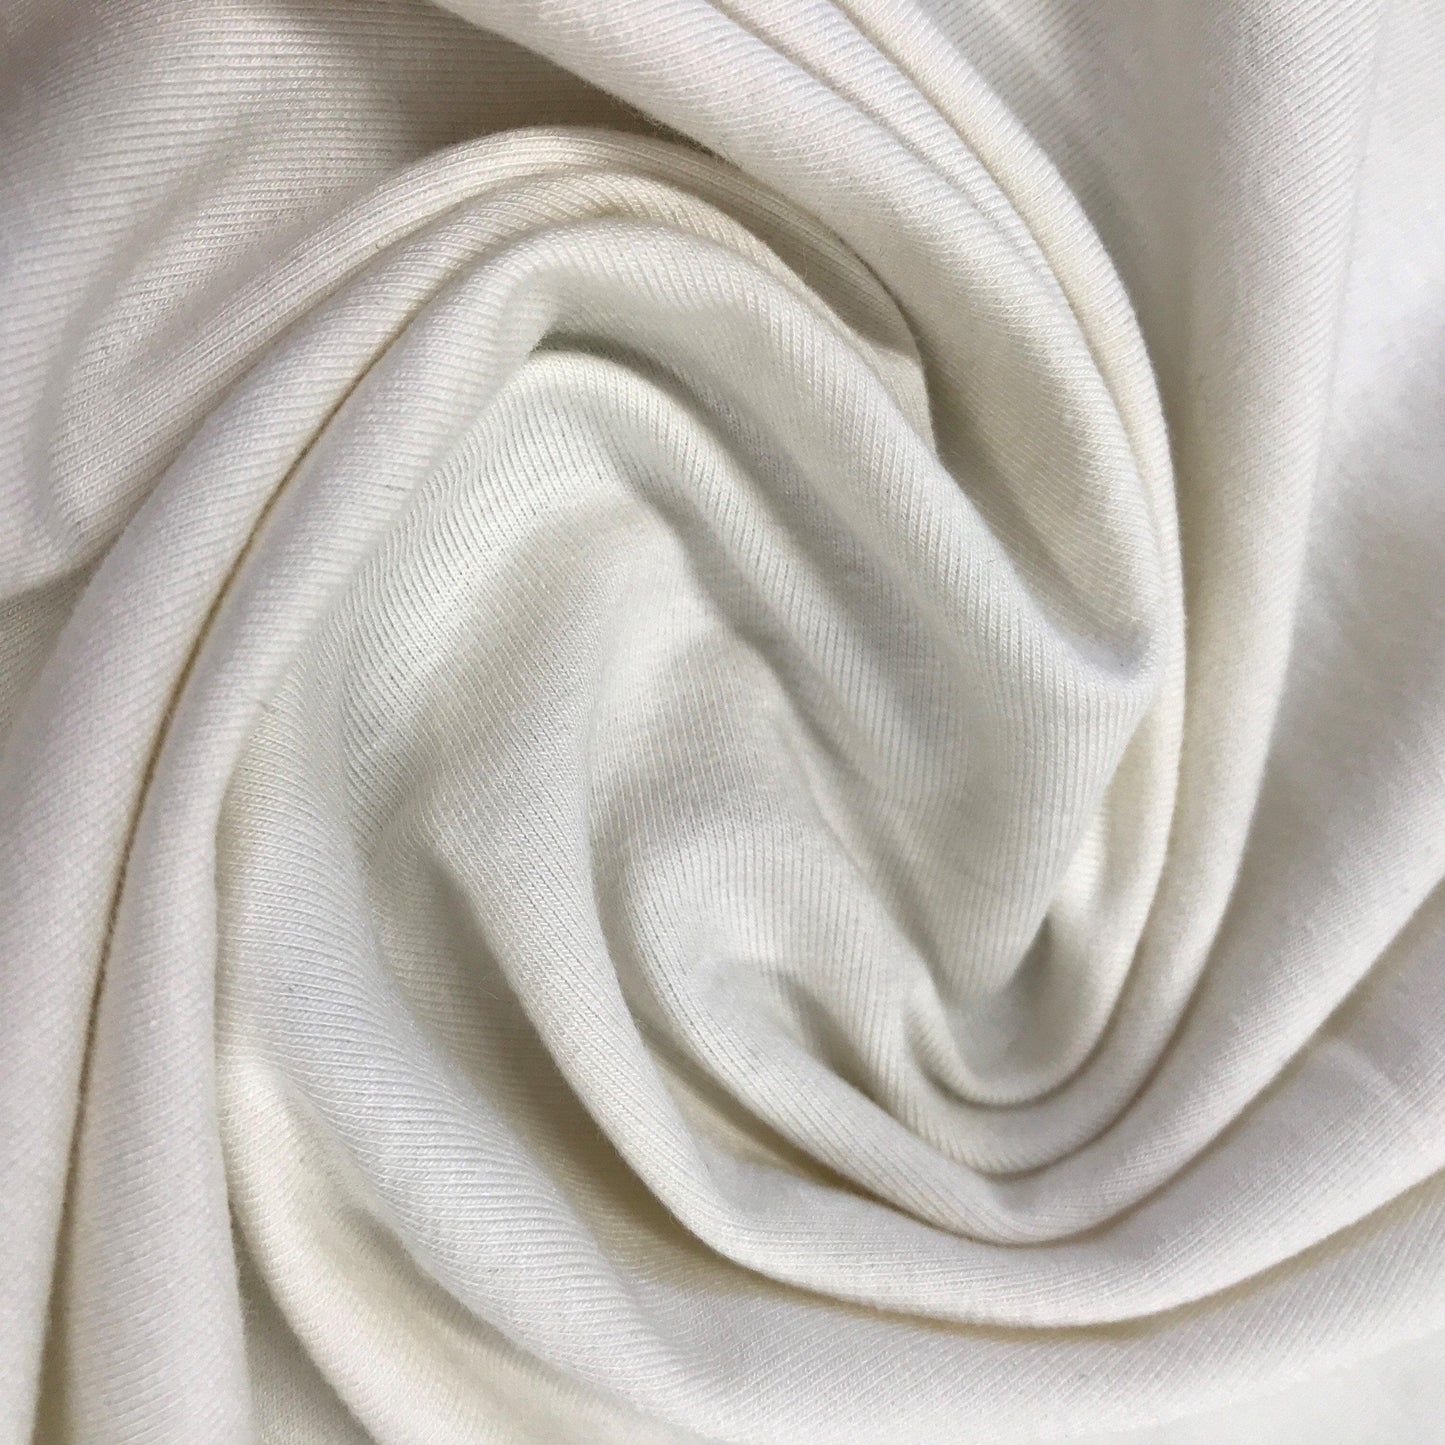 Bamboo Hemp Stretch Jersey Fabric - 300 GSM, $11.15/yd - Rolls - Nature's Fabrics